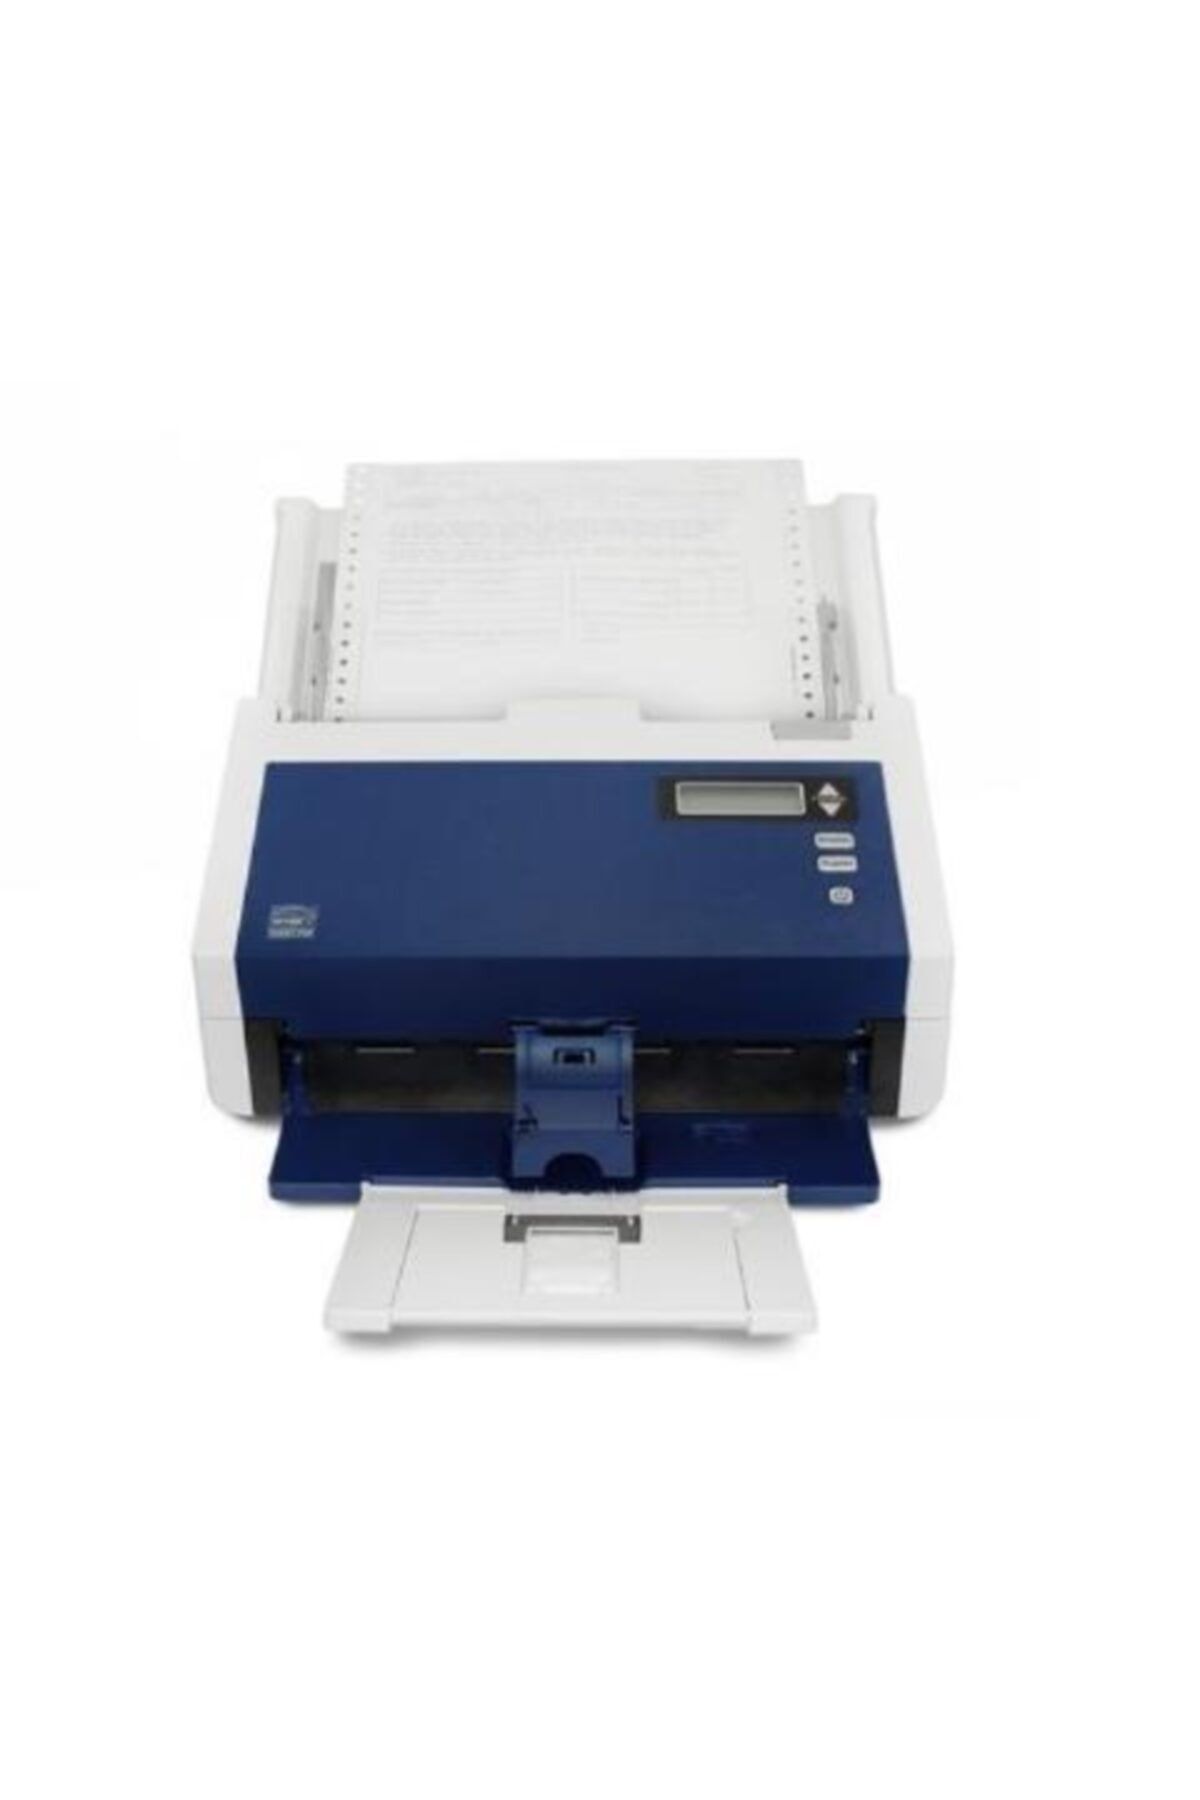 Xerox 100n03218 Documate 6440 A4 Duplex 80 Sayfa Adf 600dpi Usb 2.0 Kimlik Tarama Tarayıcı